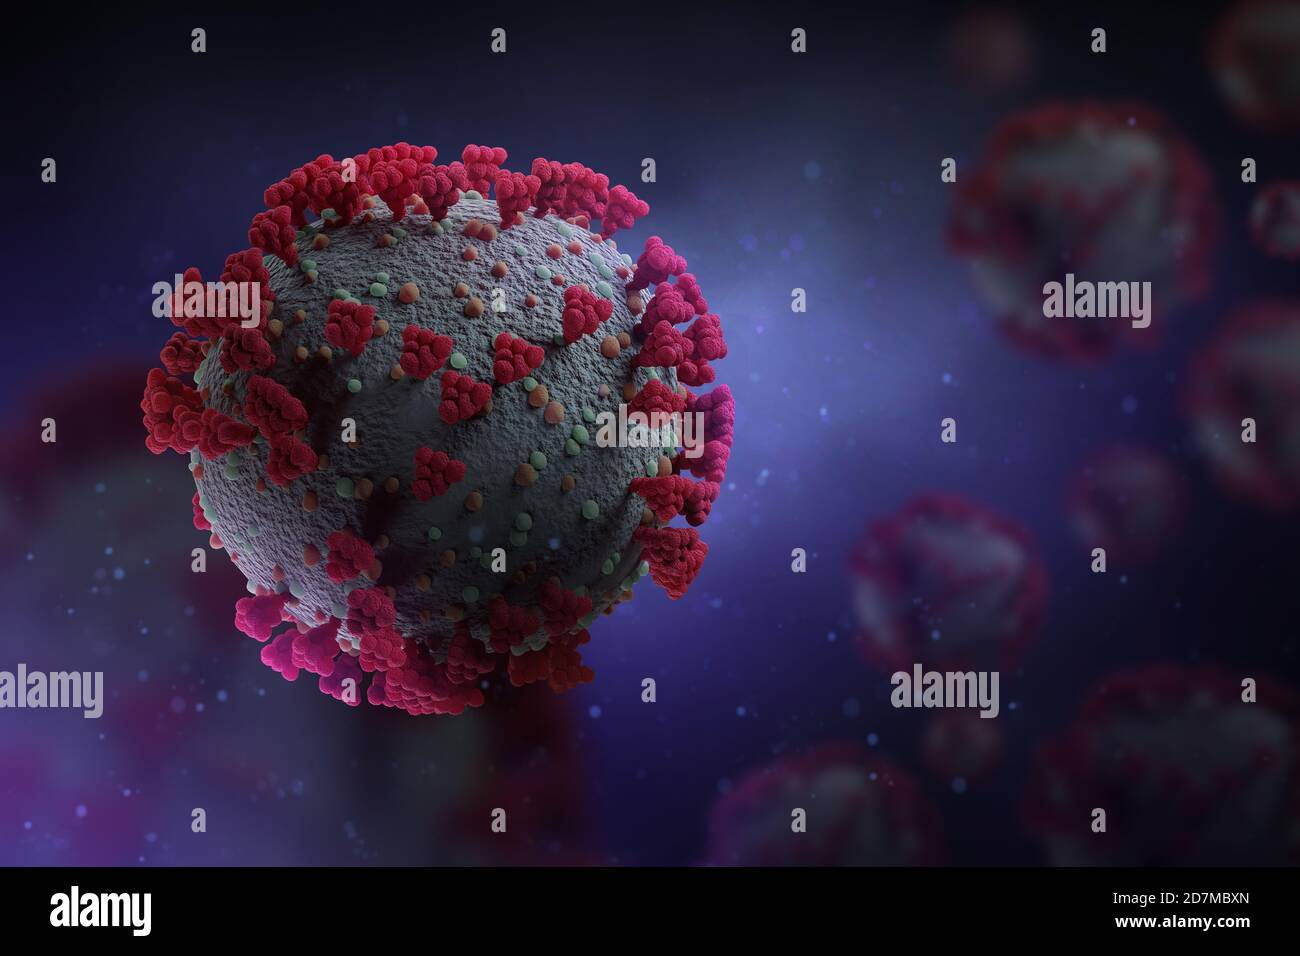 Visualization Of The Covid-19 Virus (Corona) Stock Photo